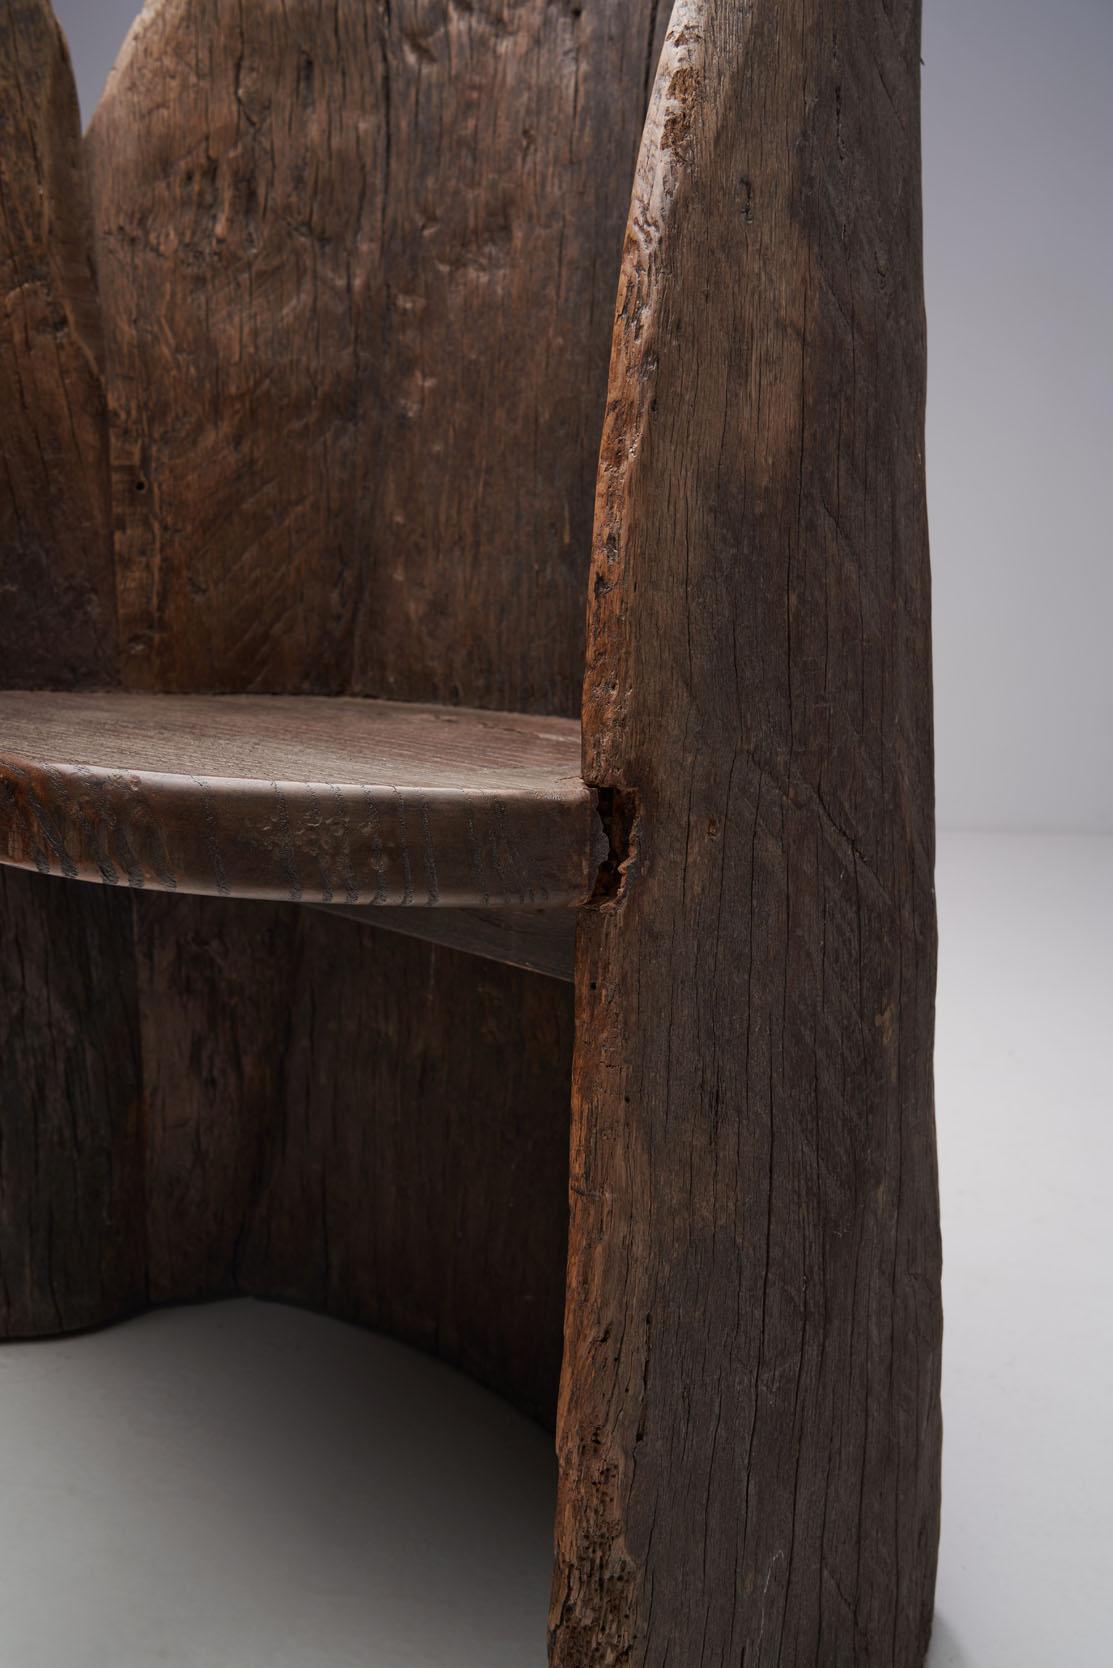 Tibetan Carved Wood “Tête a Tête” Love Seat, Tibet 19th Century For Sale 8